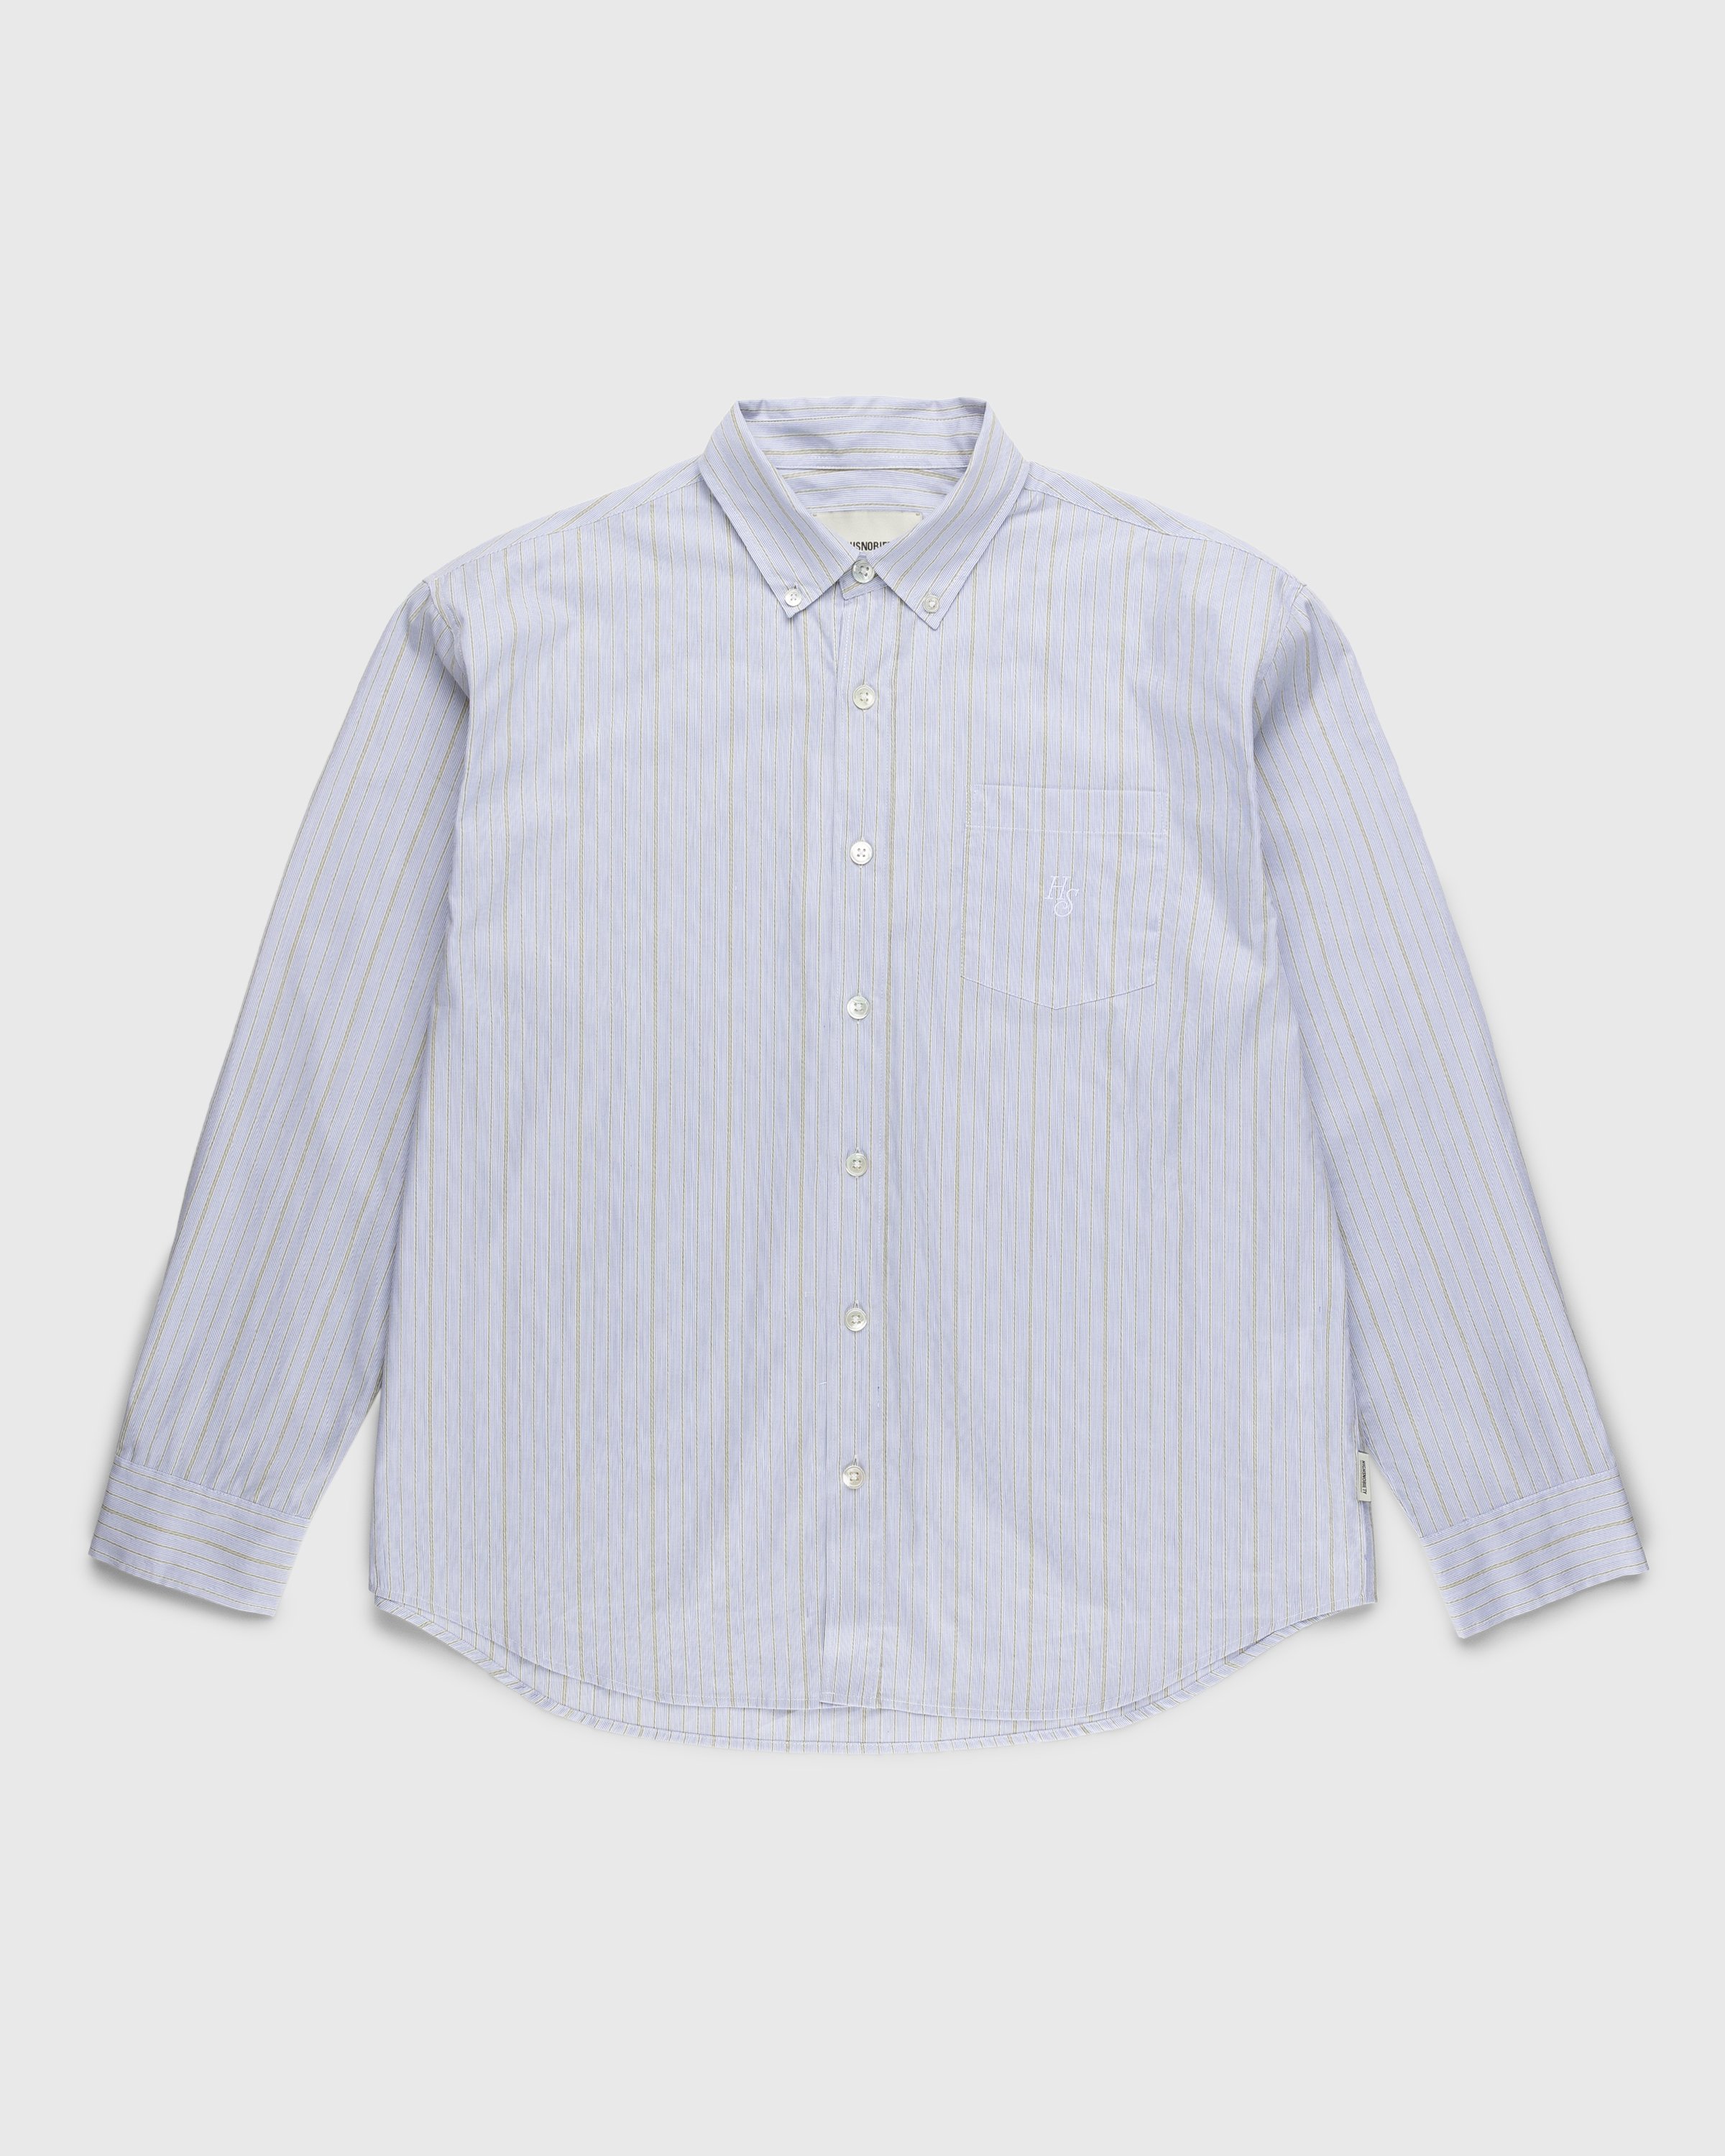 Highsnobiety - Striped Dress Shirt White/Blue - Clothing - Blue - Image 1